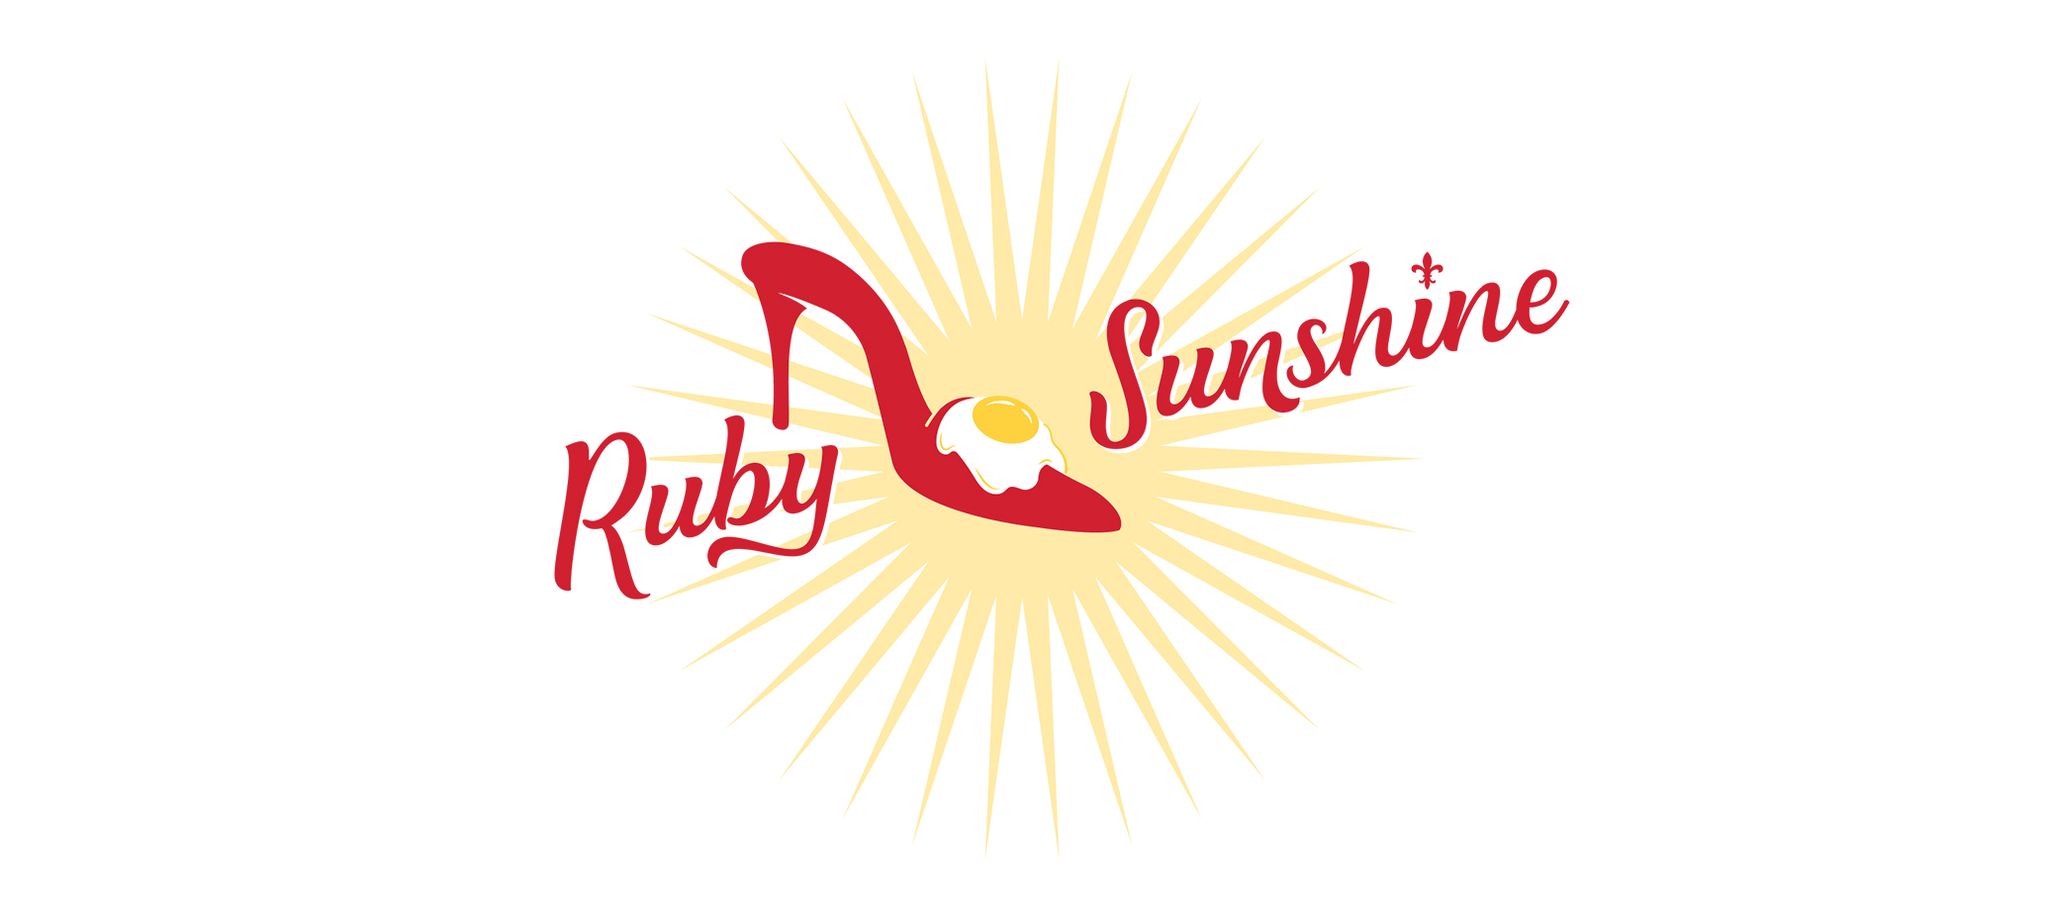 Ruby Sunshine Graphic